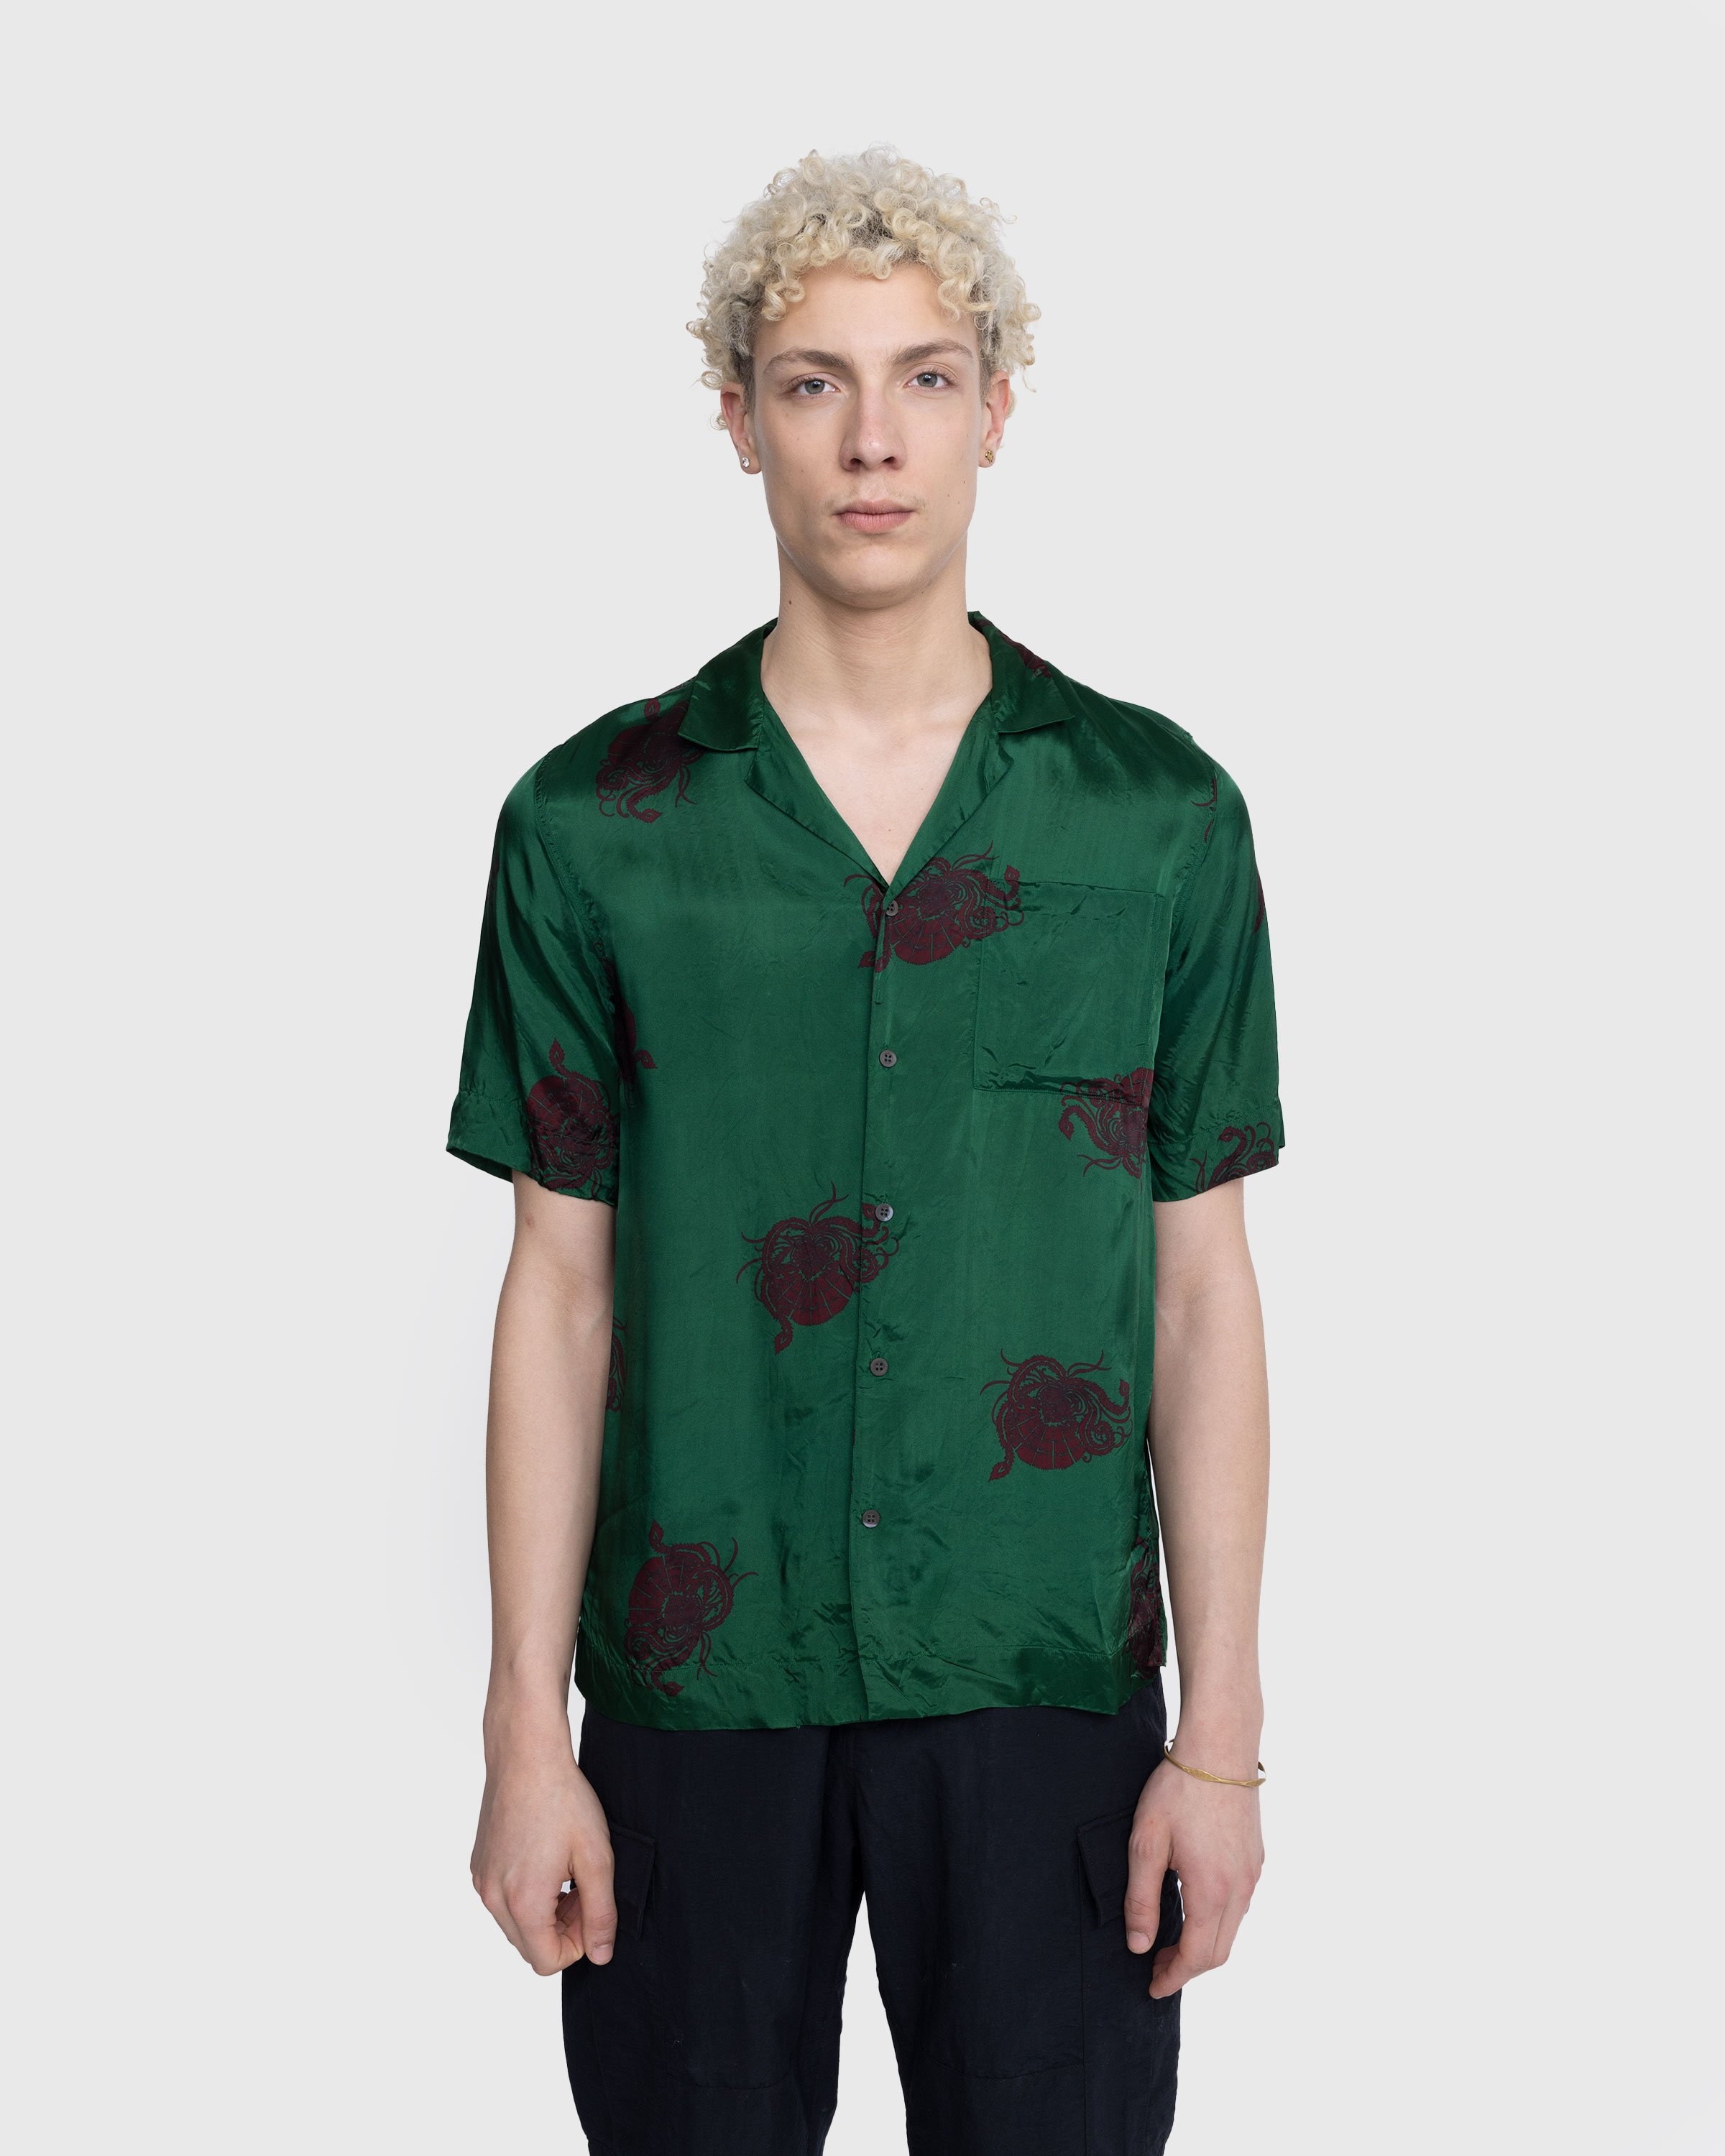 Dries van Noten – Carltone Shirt Bottle - Shortsleeve Shirts - Green - Image 2